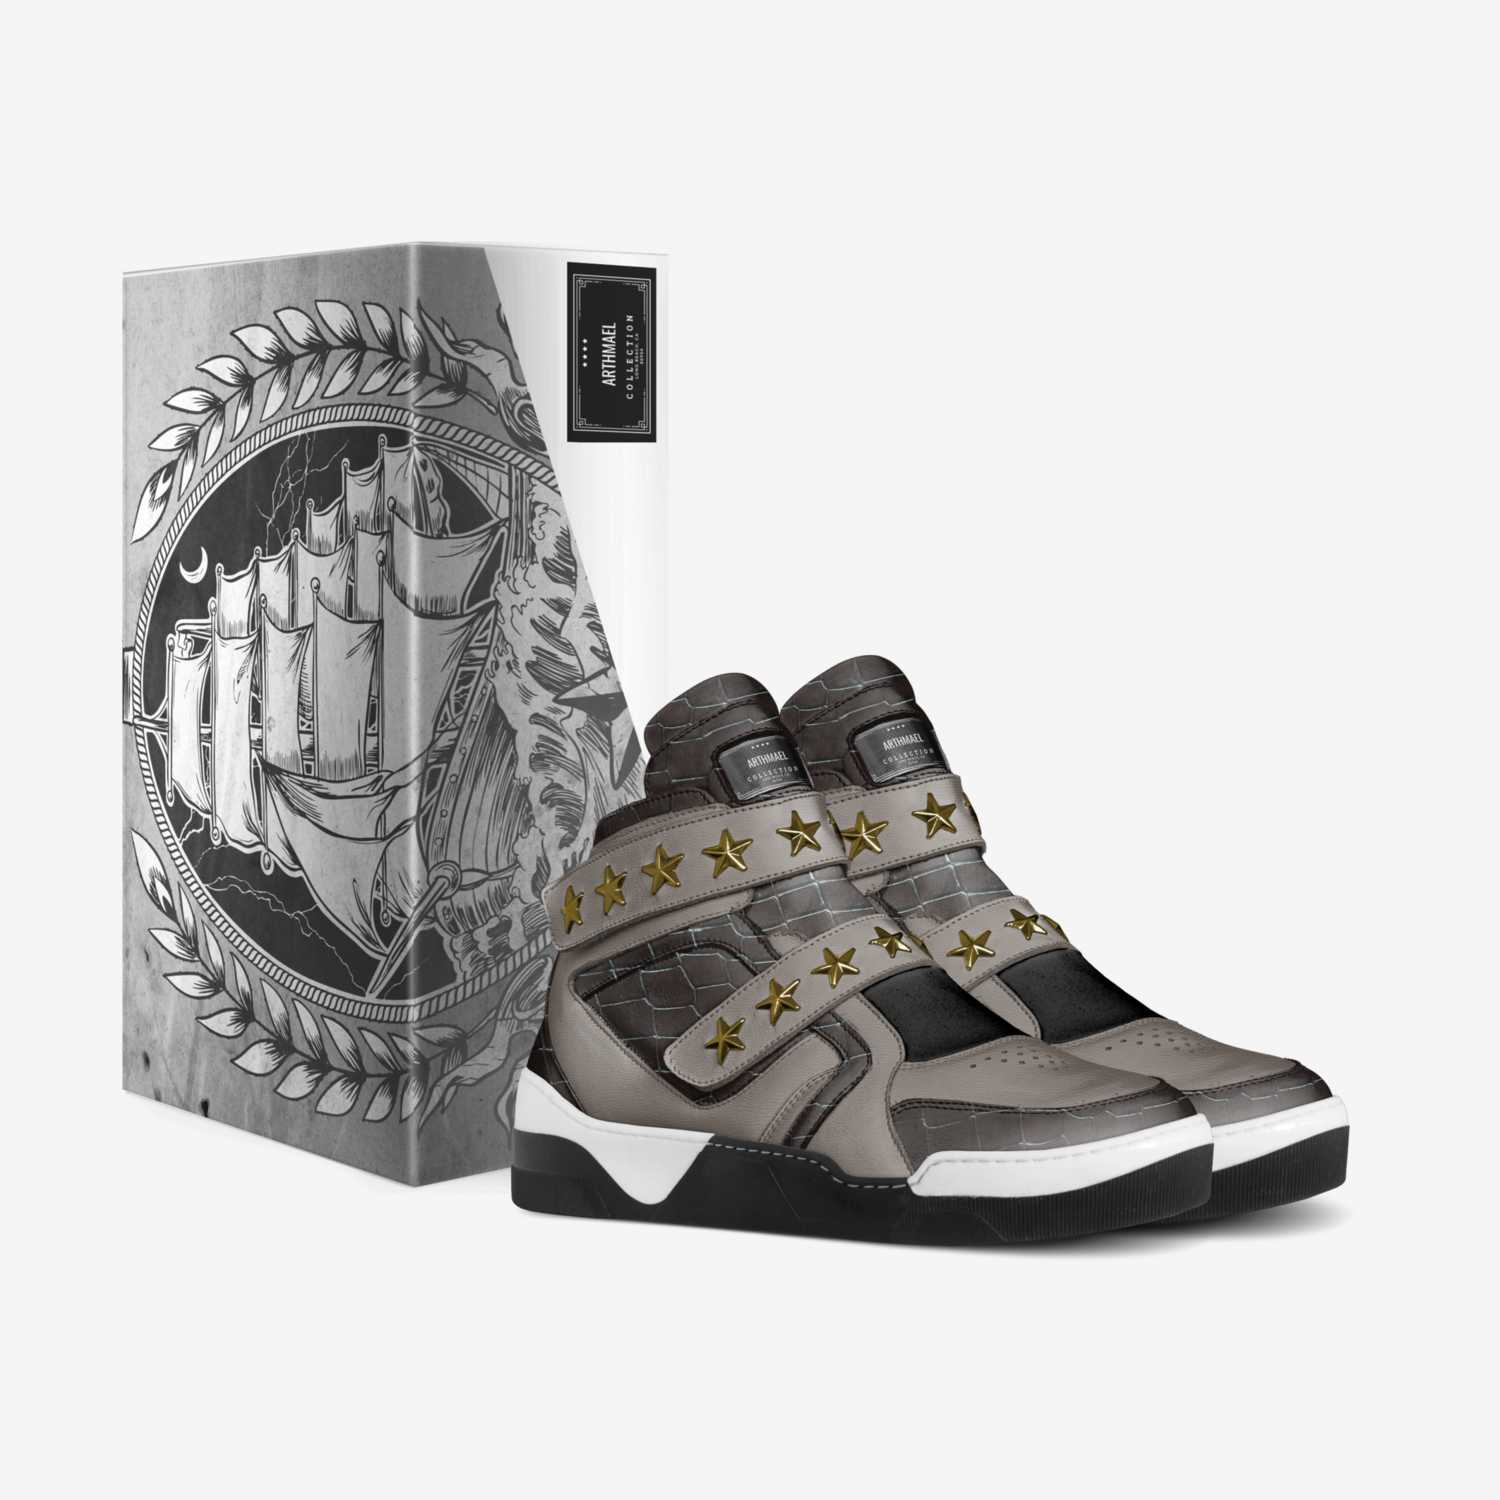 ARTHMAEL custom made in Italy shoes by Tela Jones | Box view